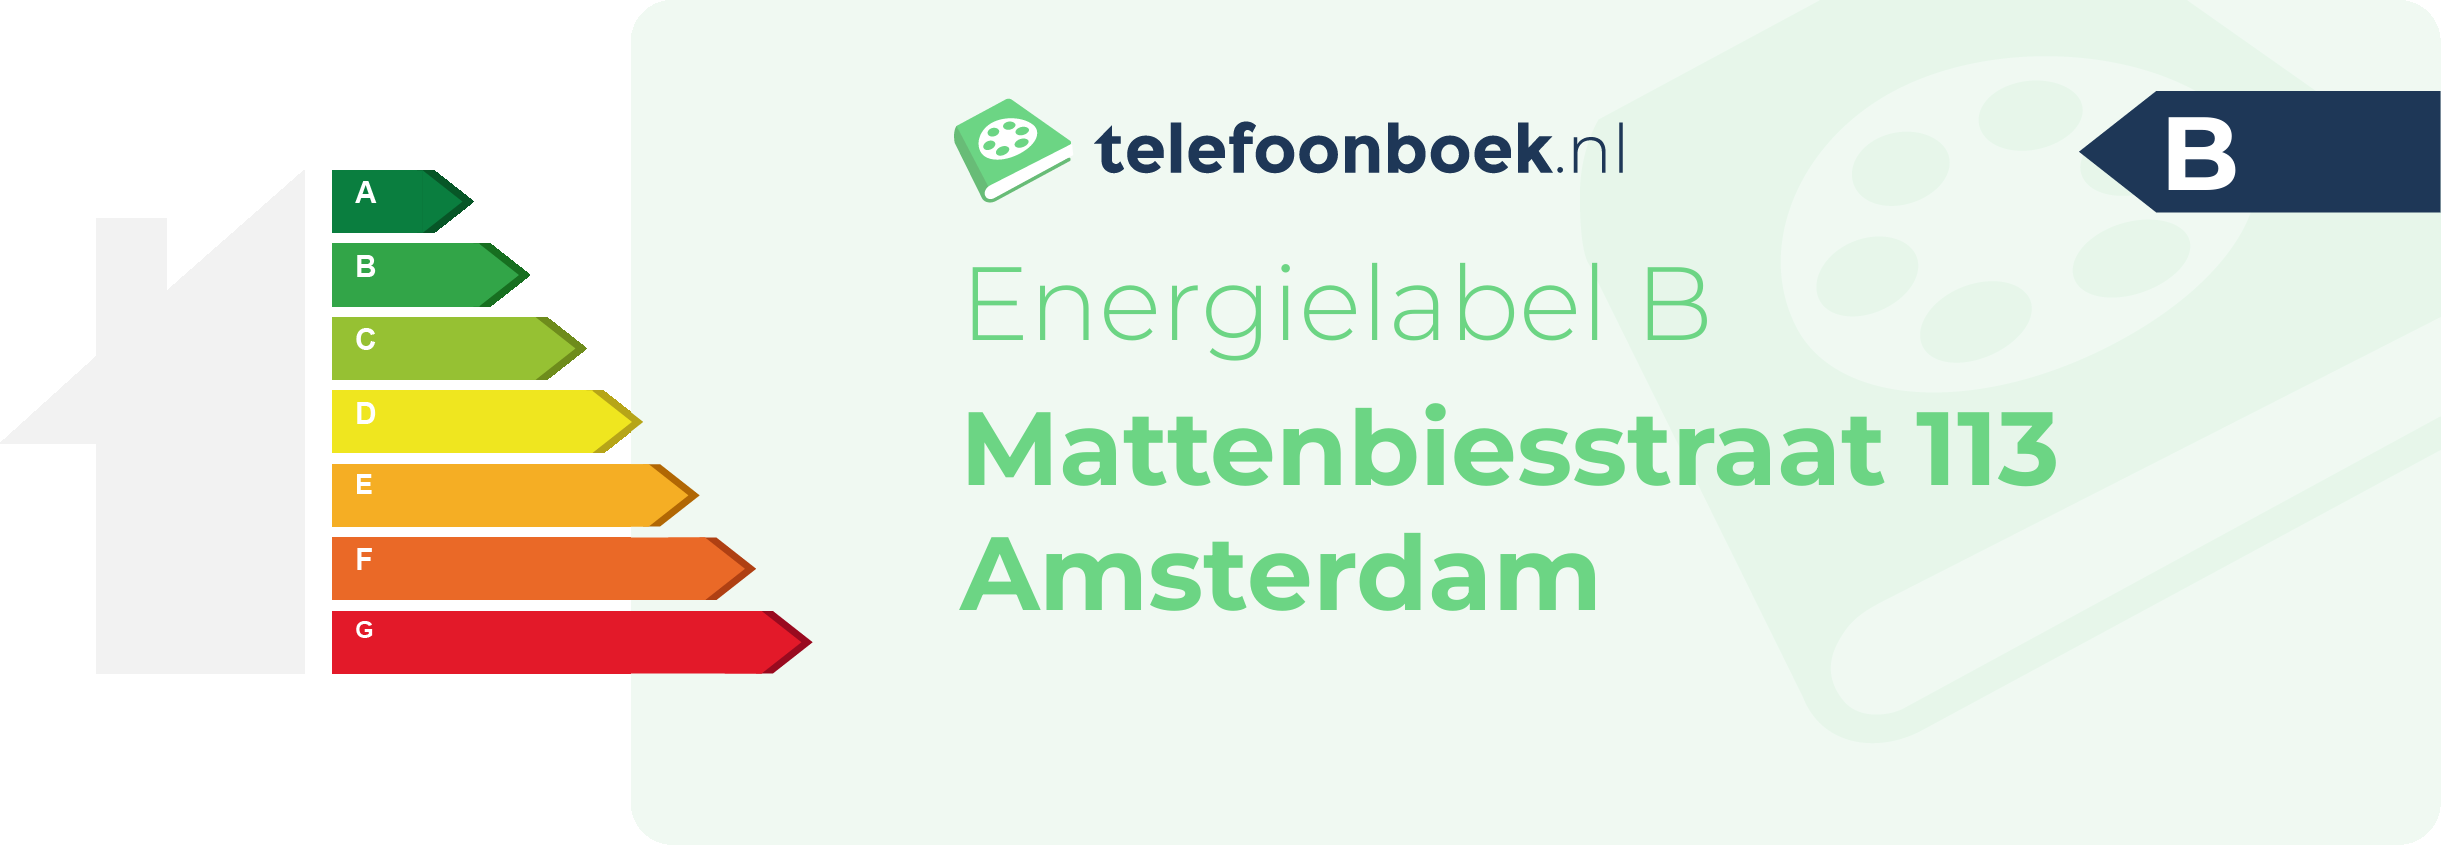 Energielabel Mattenbiesstraat 113 Amsterdam